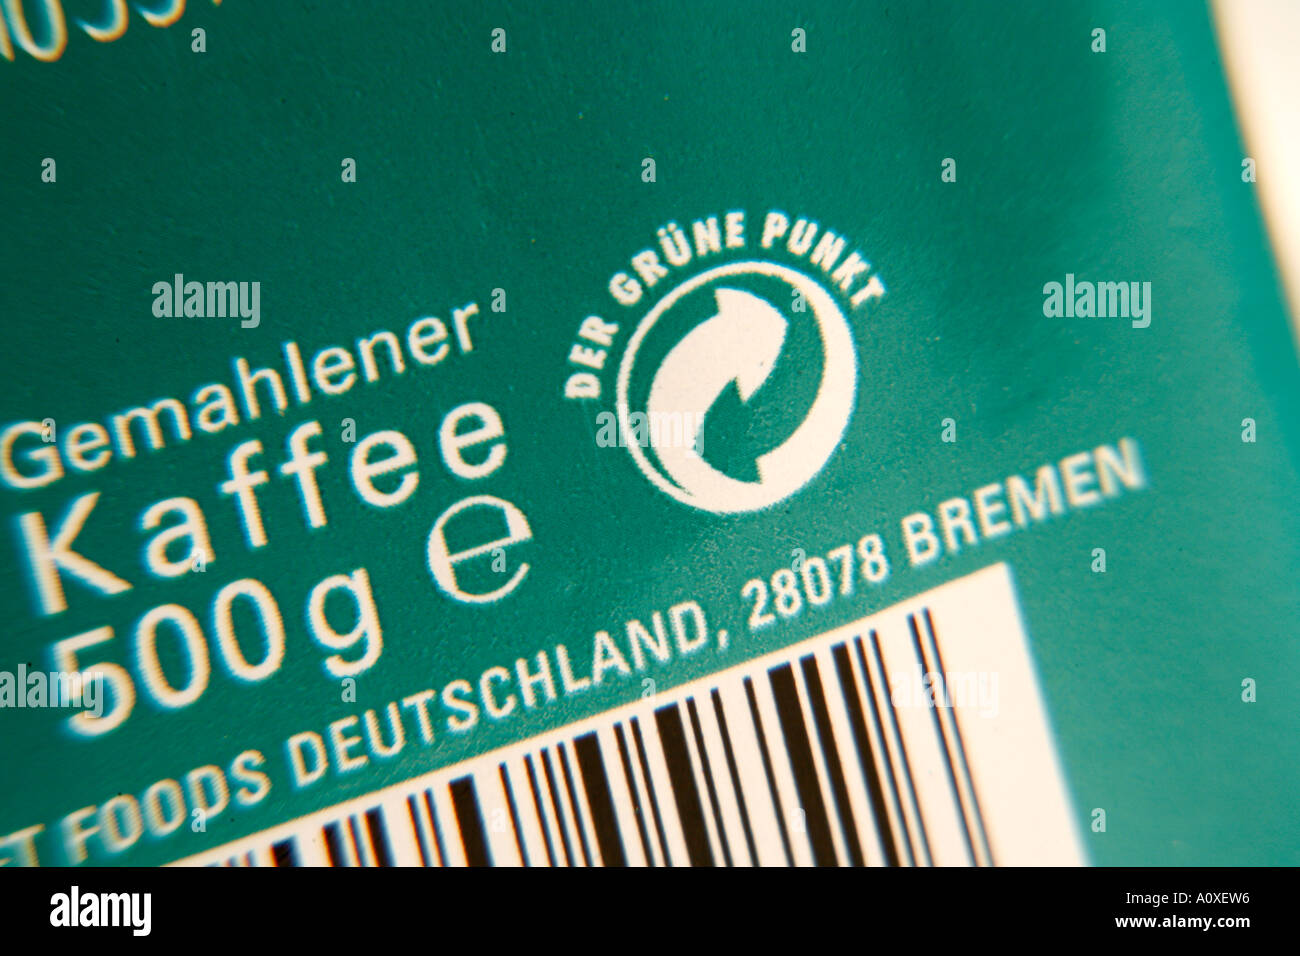 Der Grune Punkt symbol on packet of German Coffee Stock Photo